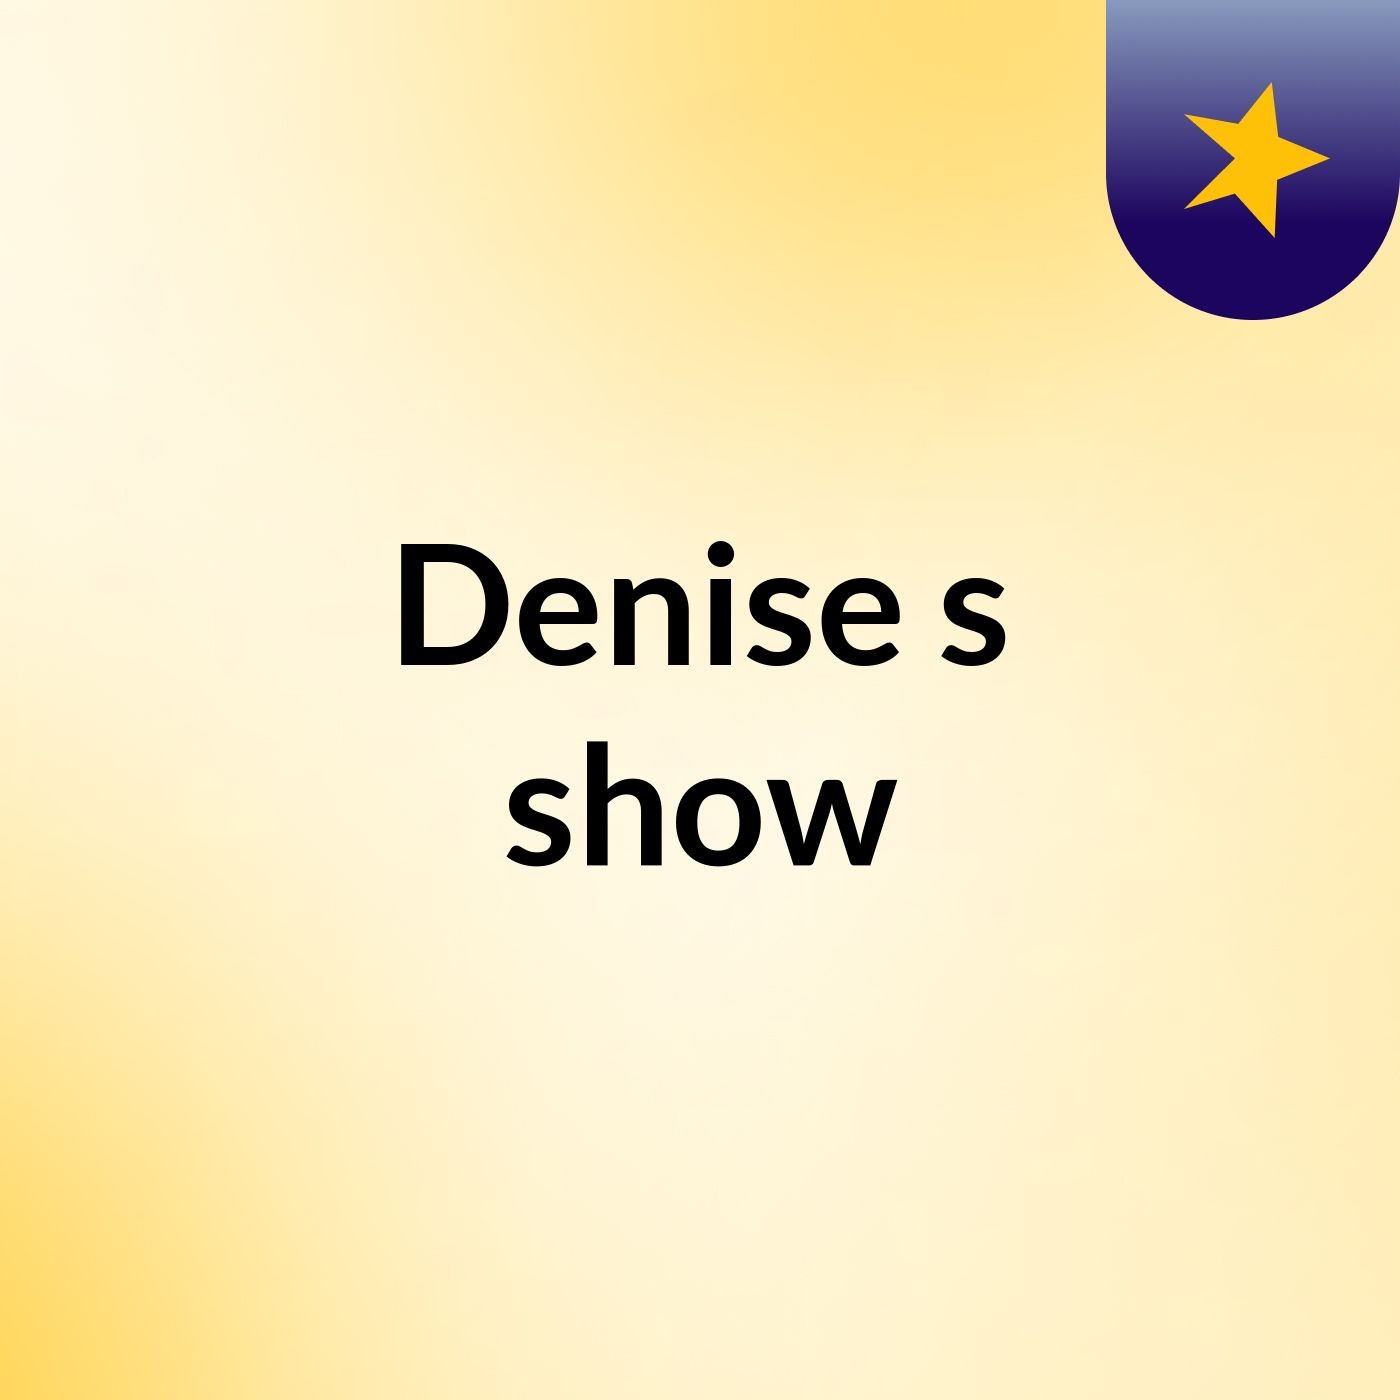 Denise's show